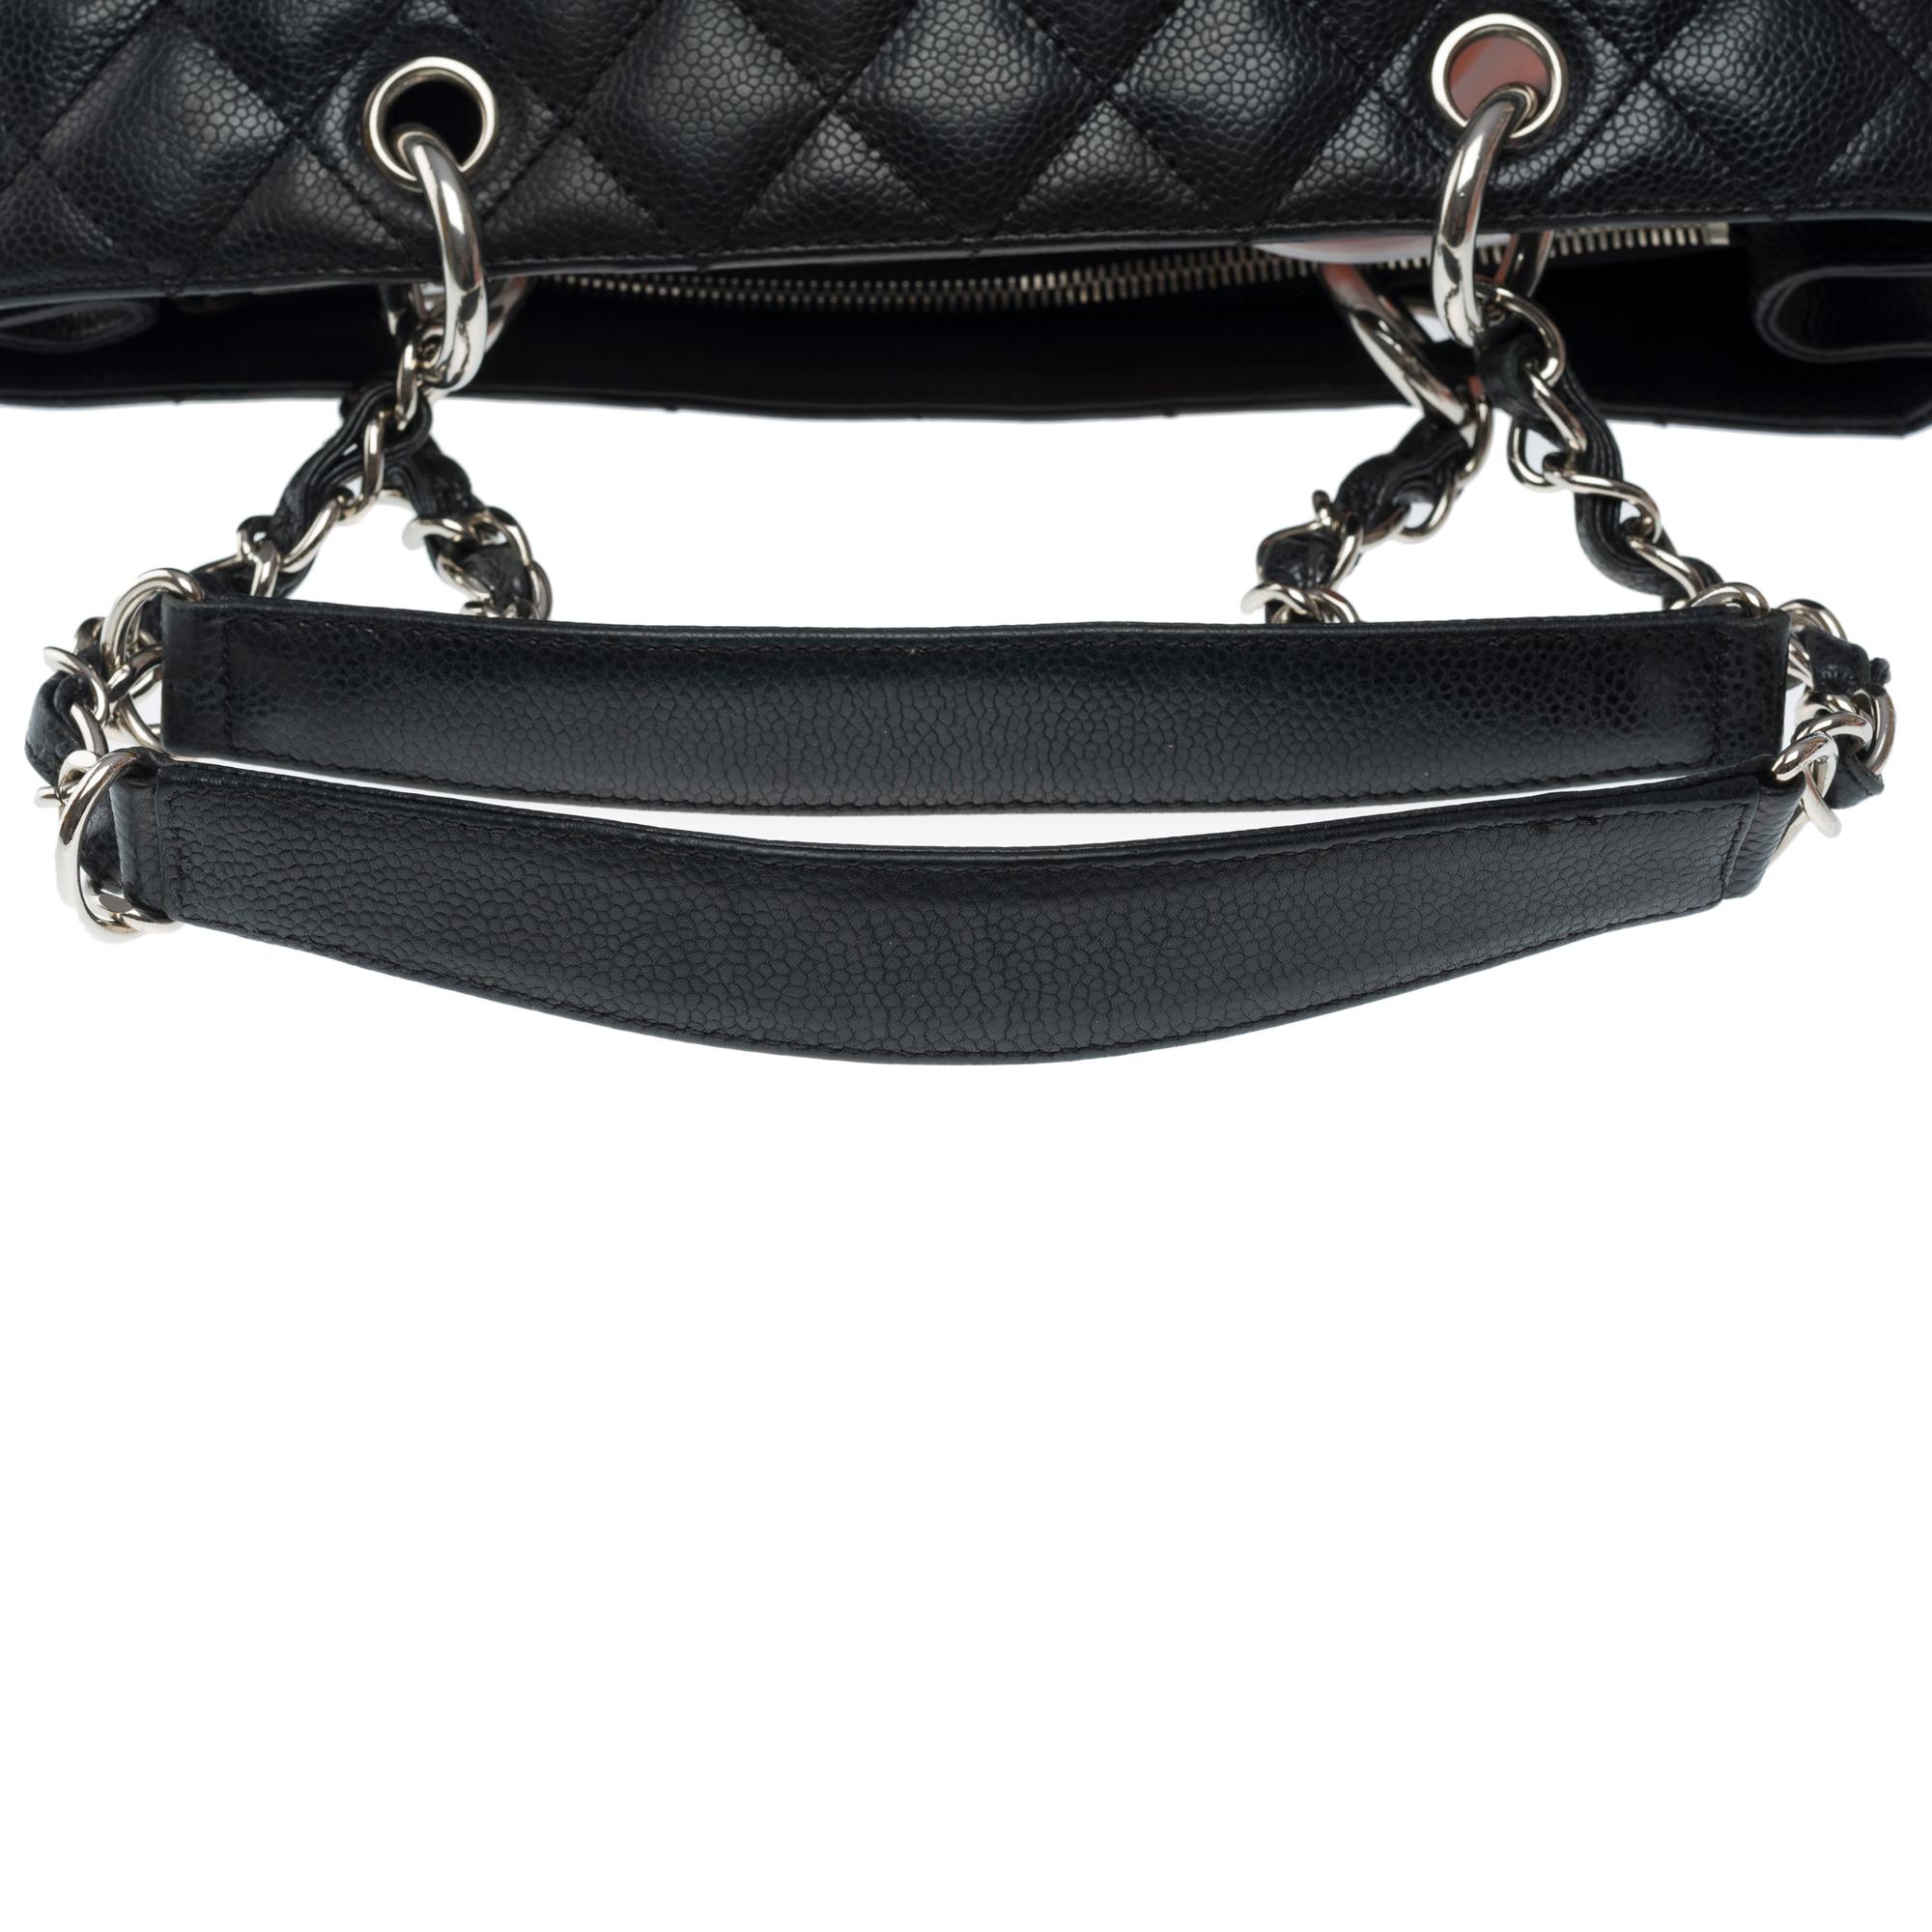  Chanel Grand Shopping Tote bag (GST) en cuir matelassé Caviar noir, SHW en vente 5